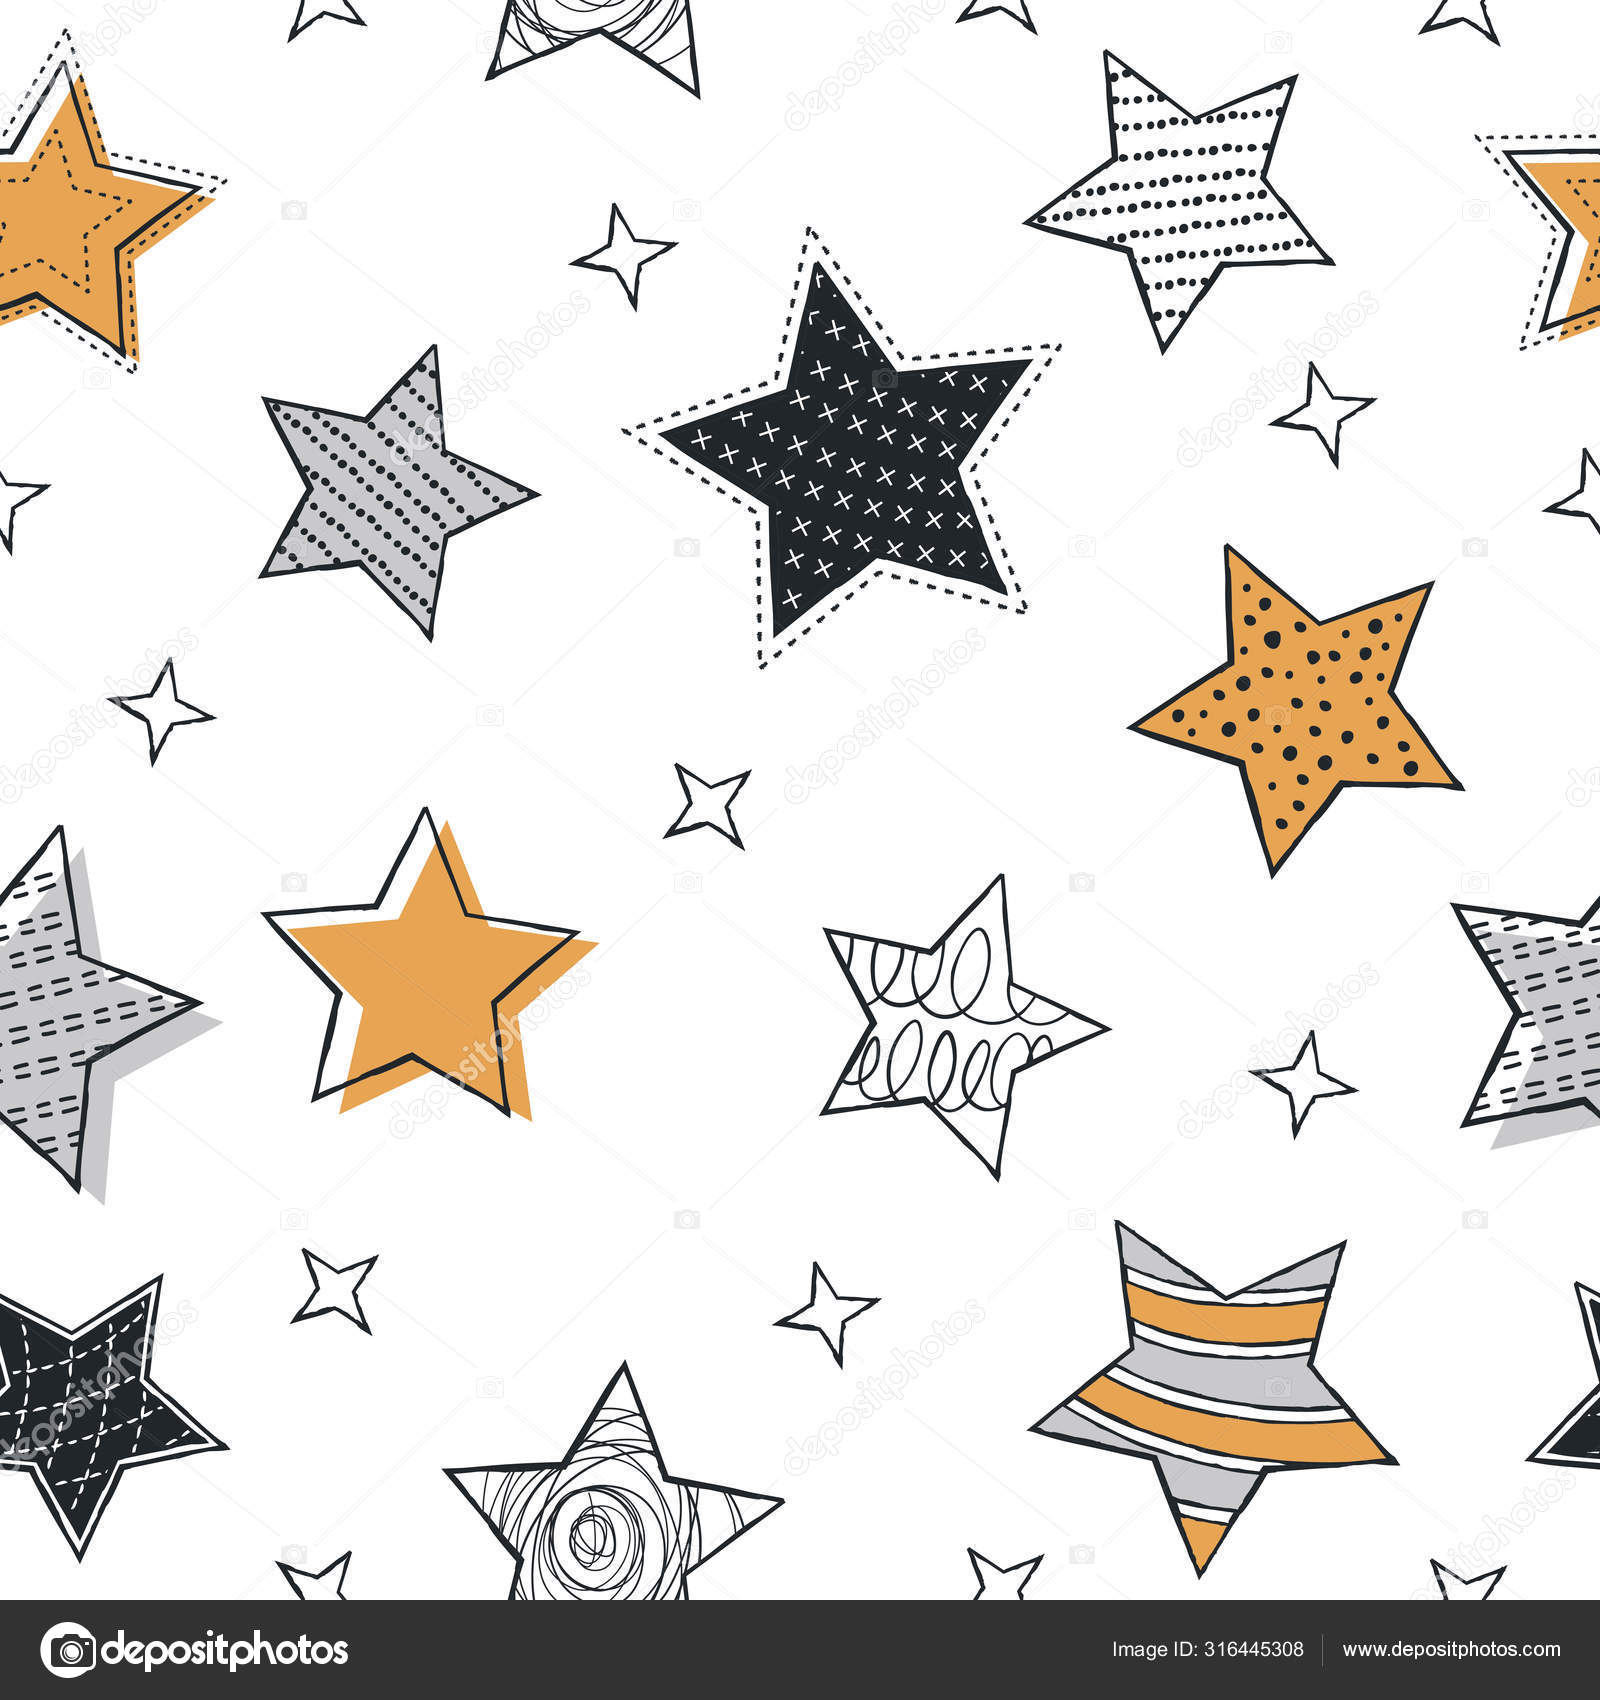 Cute Stars Tissue Paper